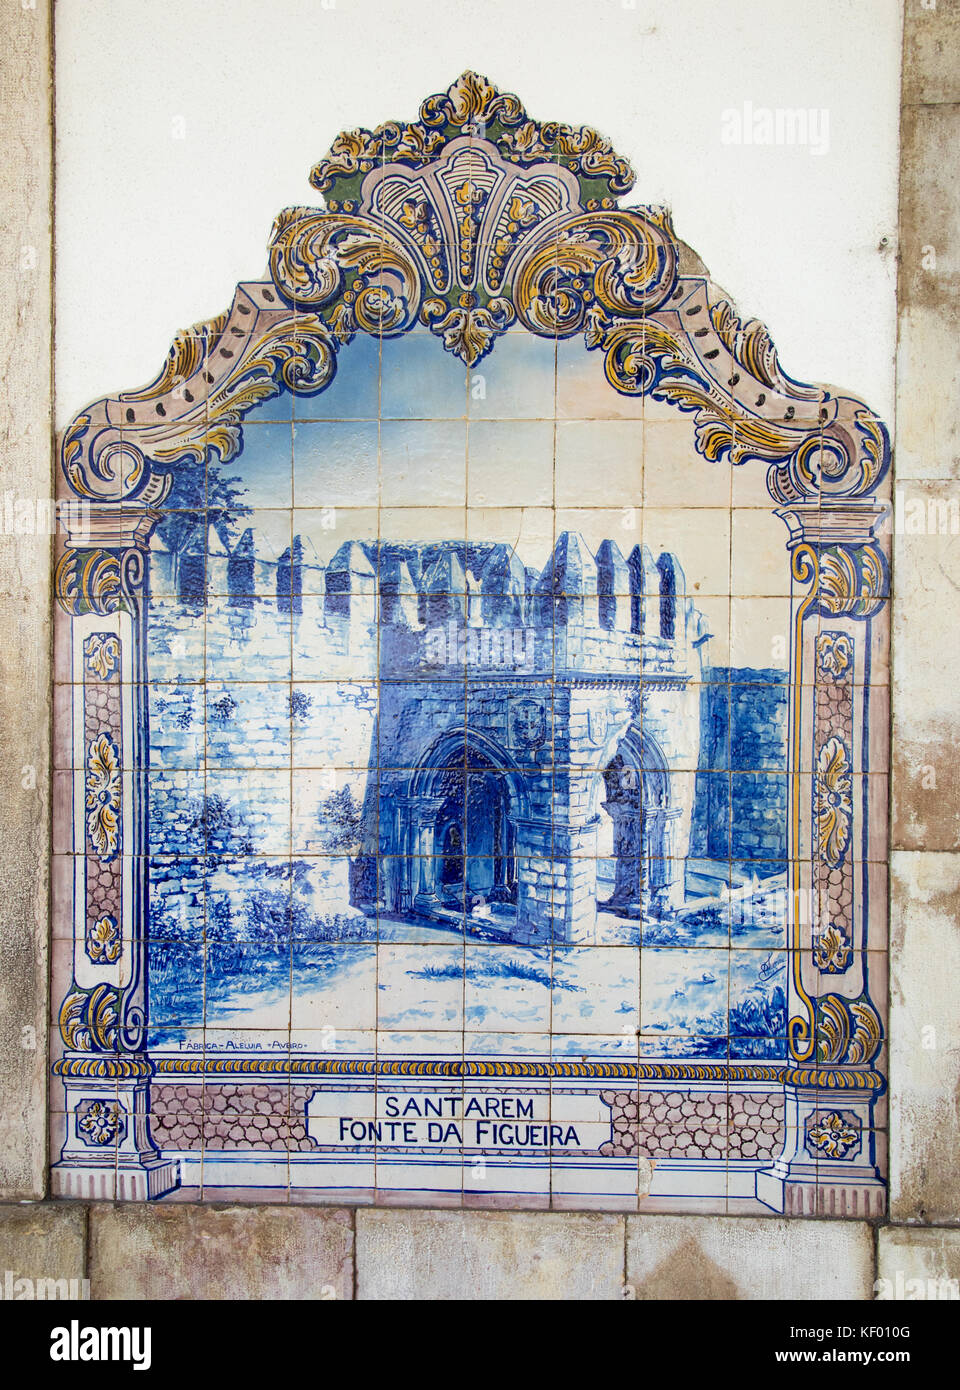 Blue ceramic tiles representing historic Fonte da Figueira in Santarem, Santarem Railway Station, Portugal Stock Photo